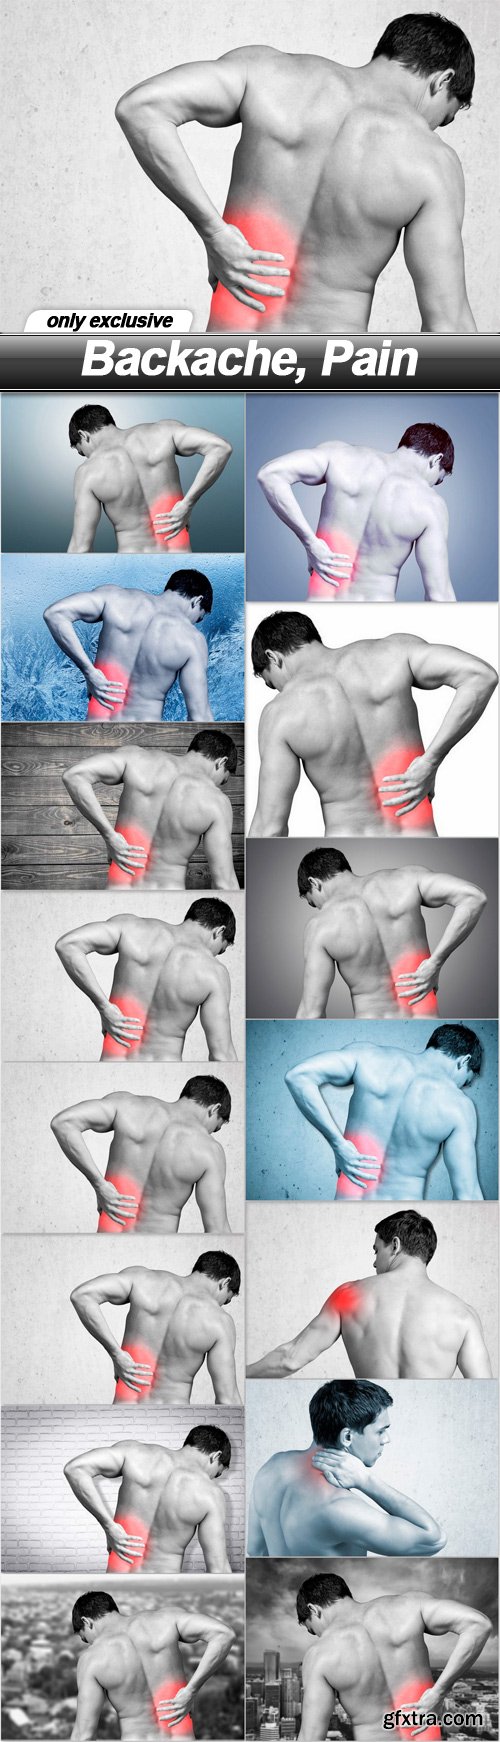 Backache, Pain - 15 UHQ JPEG